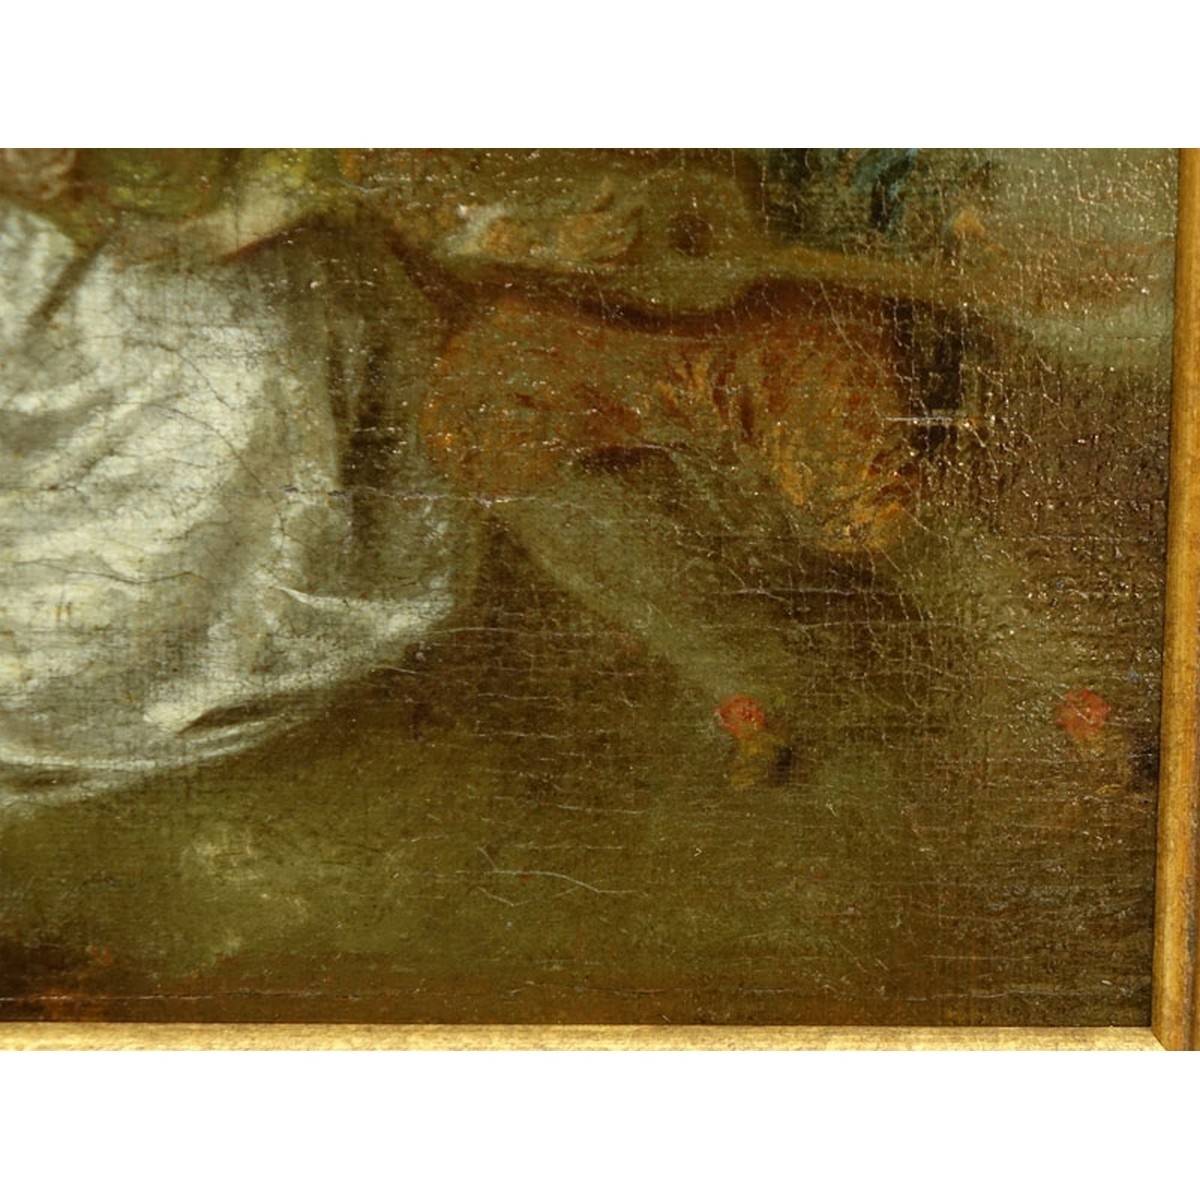 Antoine Watteau (1684 - 1721) Oil on Canvas